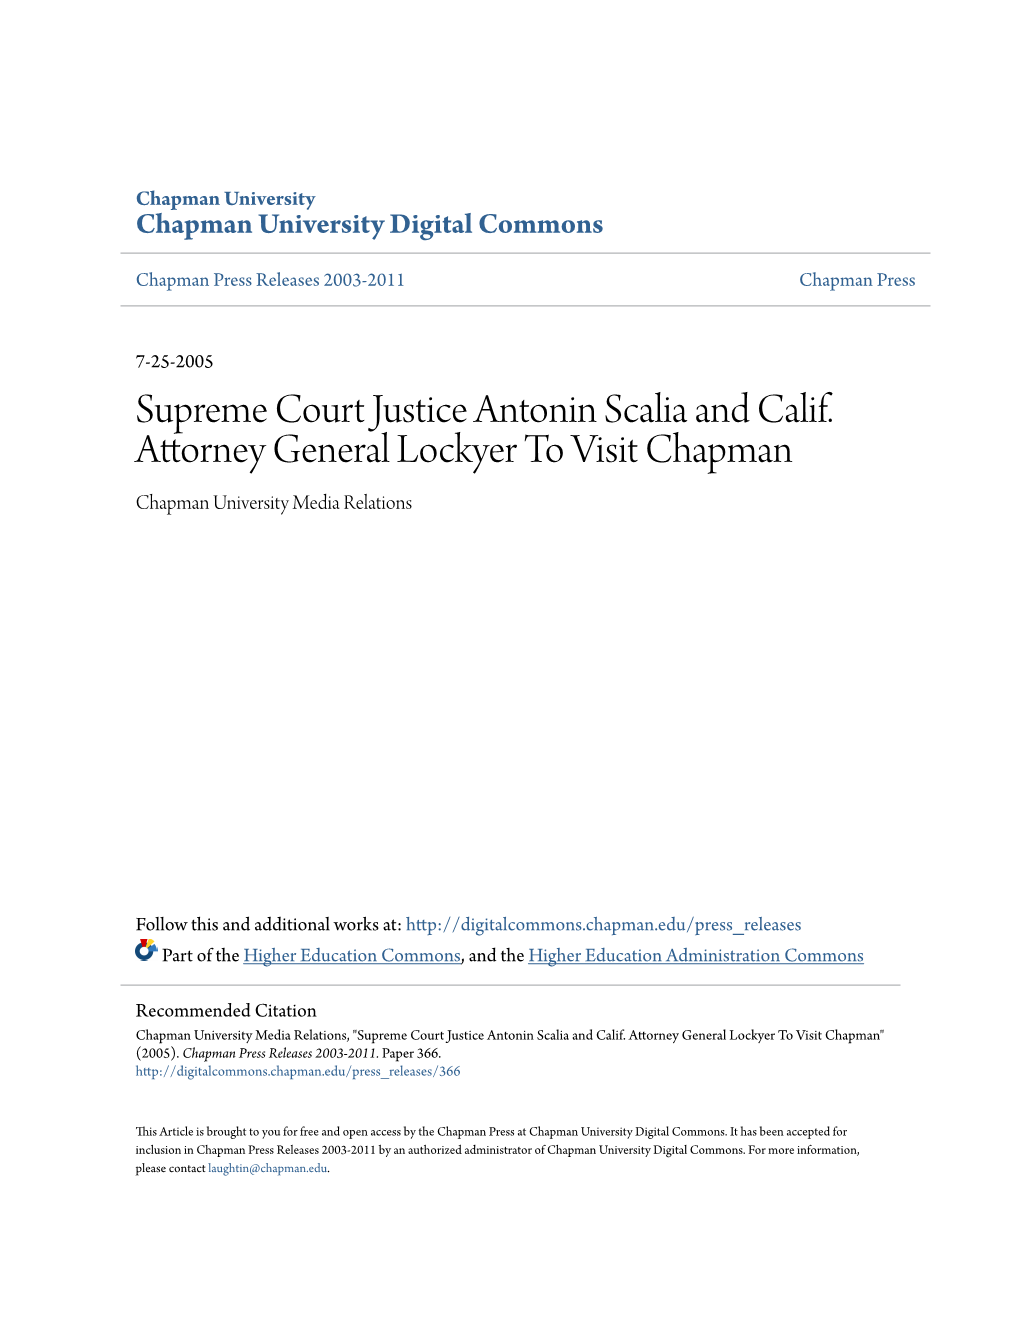 Supreme Court Justice Antonin Scalia and Calif. Attorney General Lockyer to Visit Chapman Chapman University Media Relations